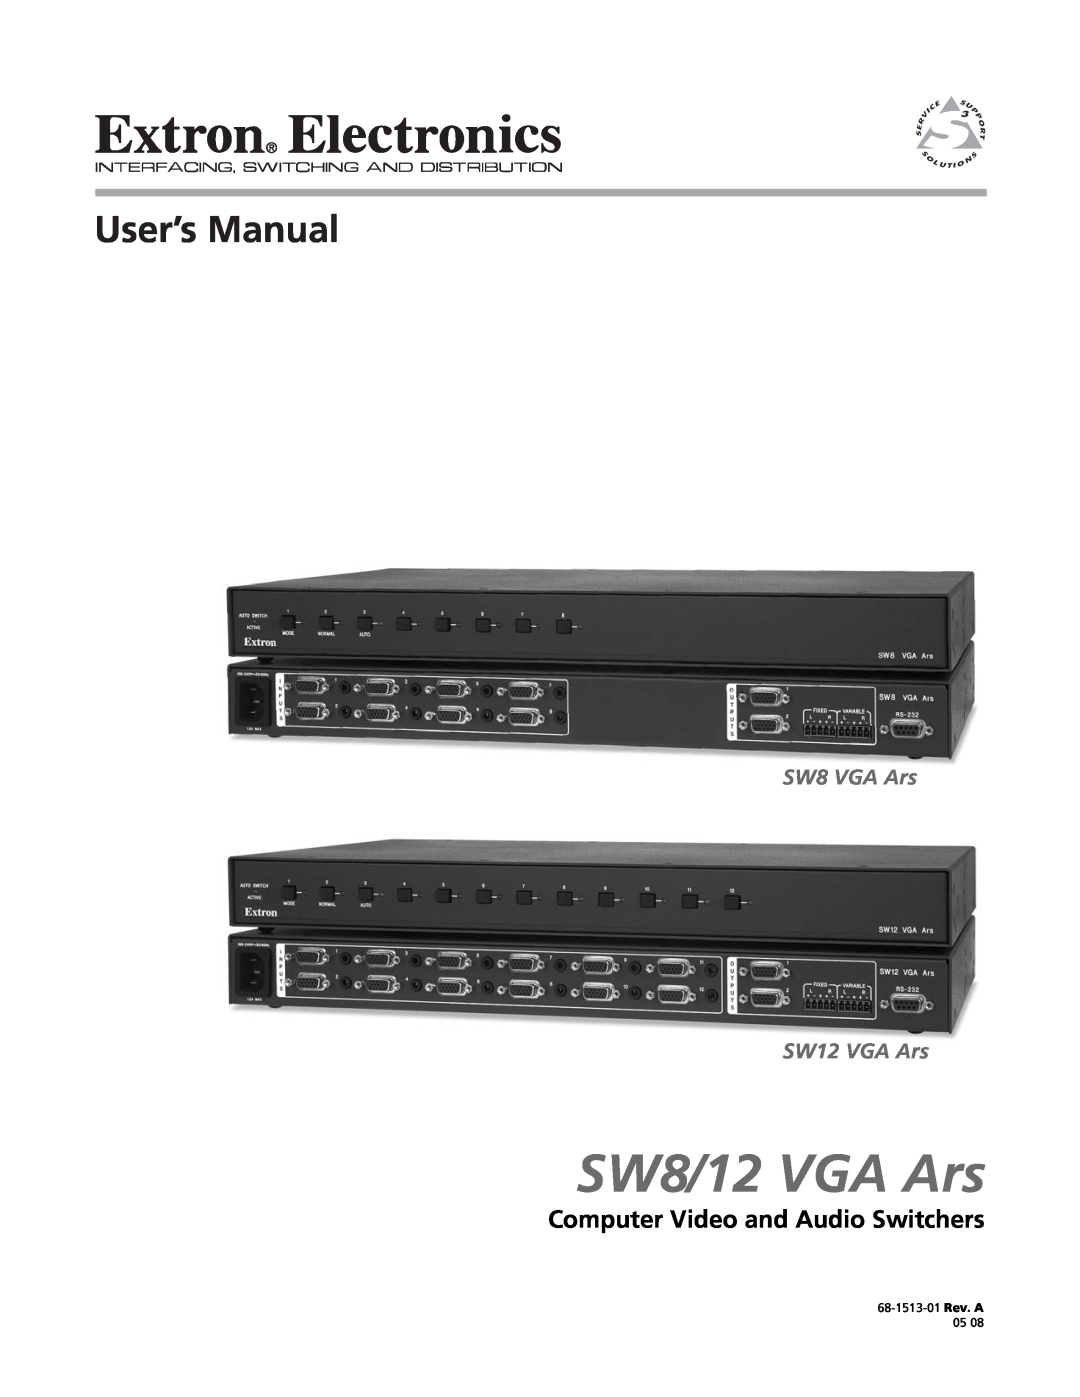 Extron electronic SW12 VGA ARS manual Computer Video and Audio Switchers, SW8/12 VGA Ars, SW8 VGA Ars SW12 VGA Ars 